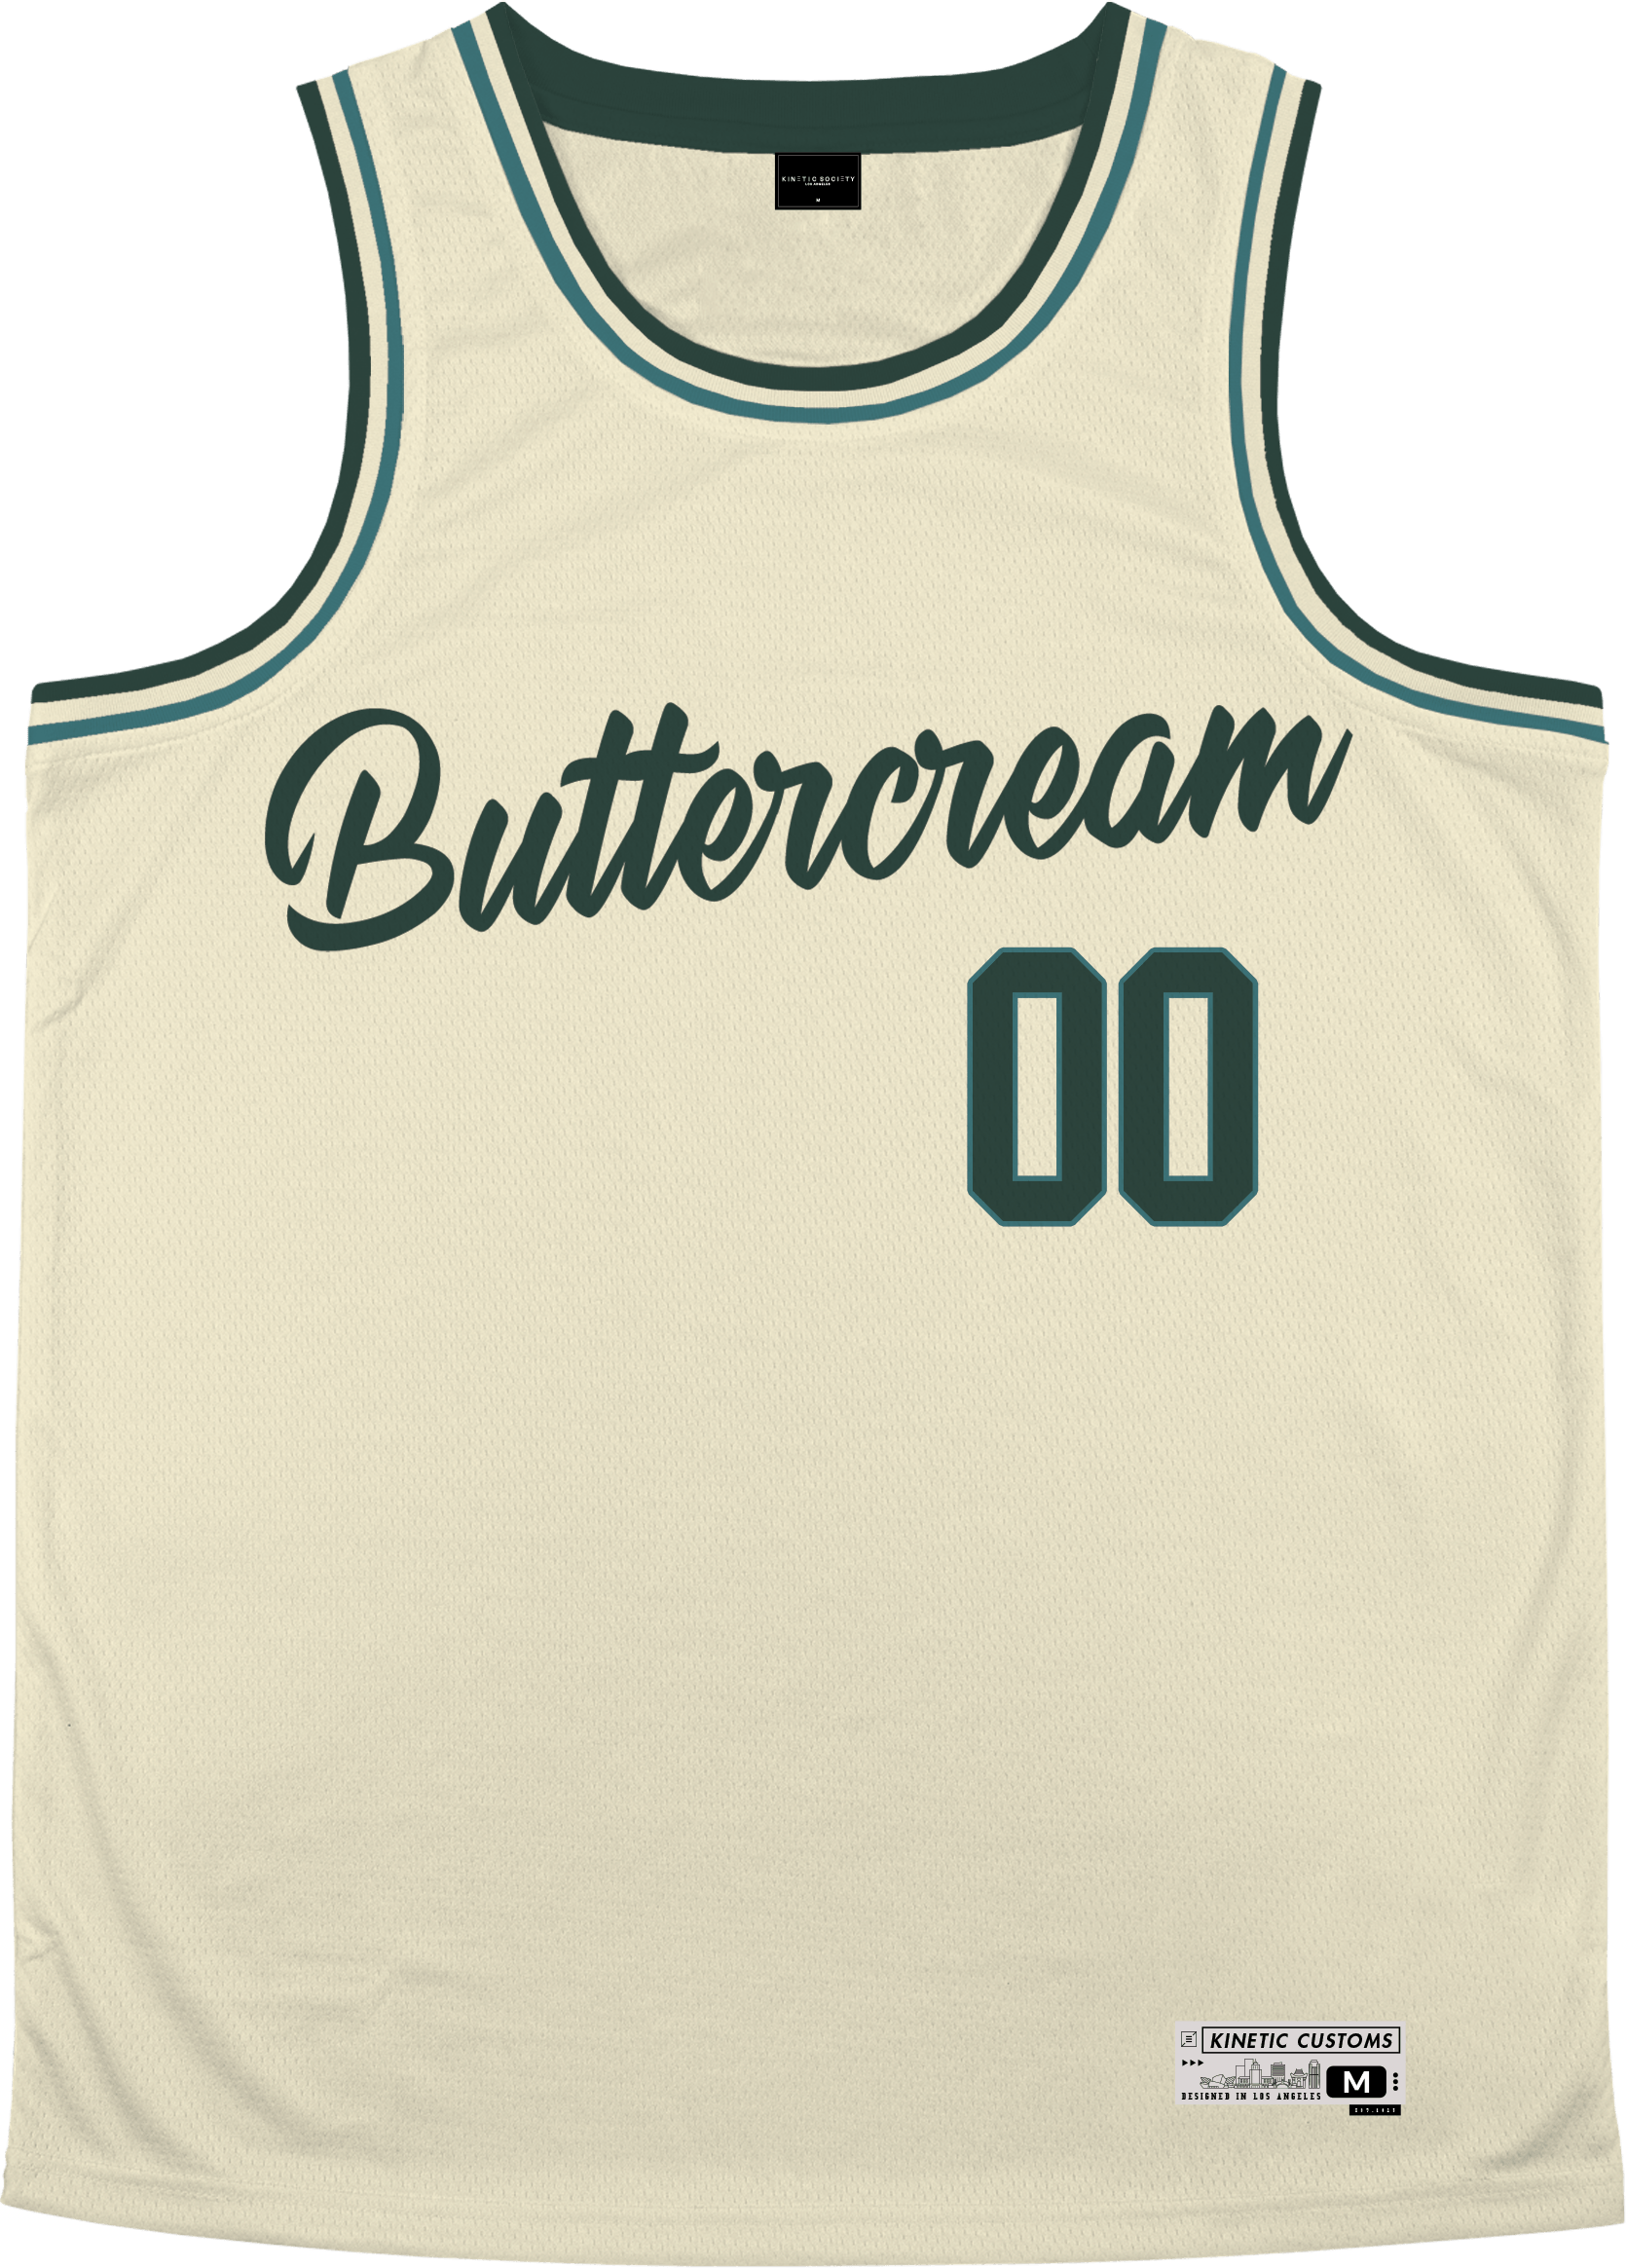 Kinetic ID - Buttercream Basketball Jersey Premium Basketball Kinetic Society LLC 